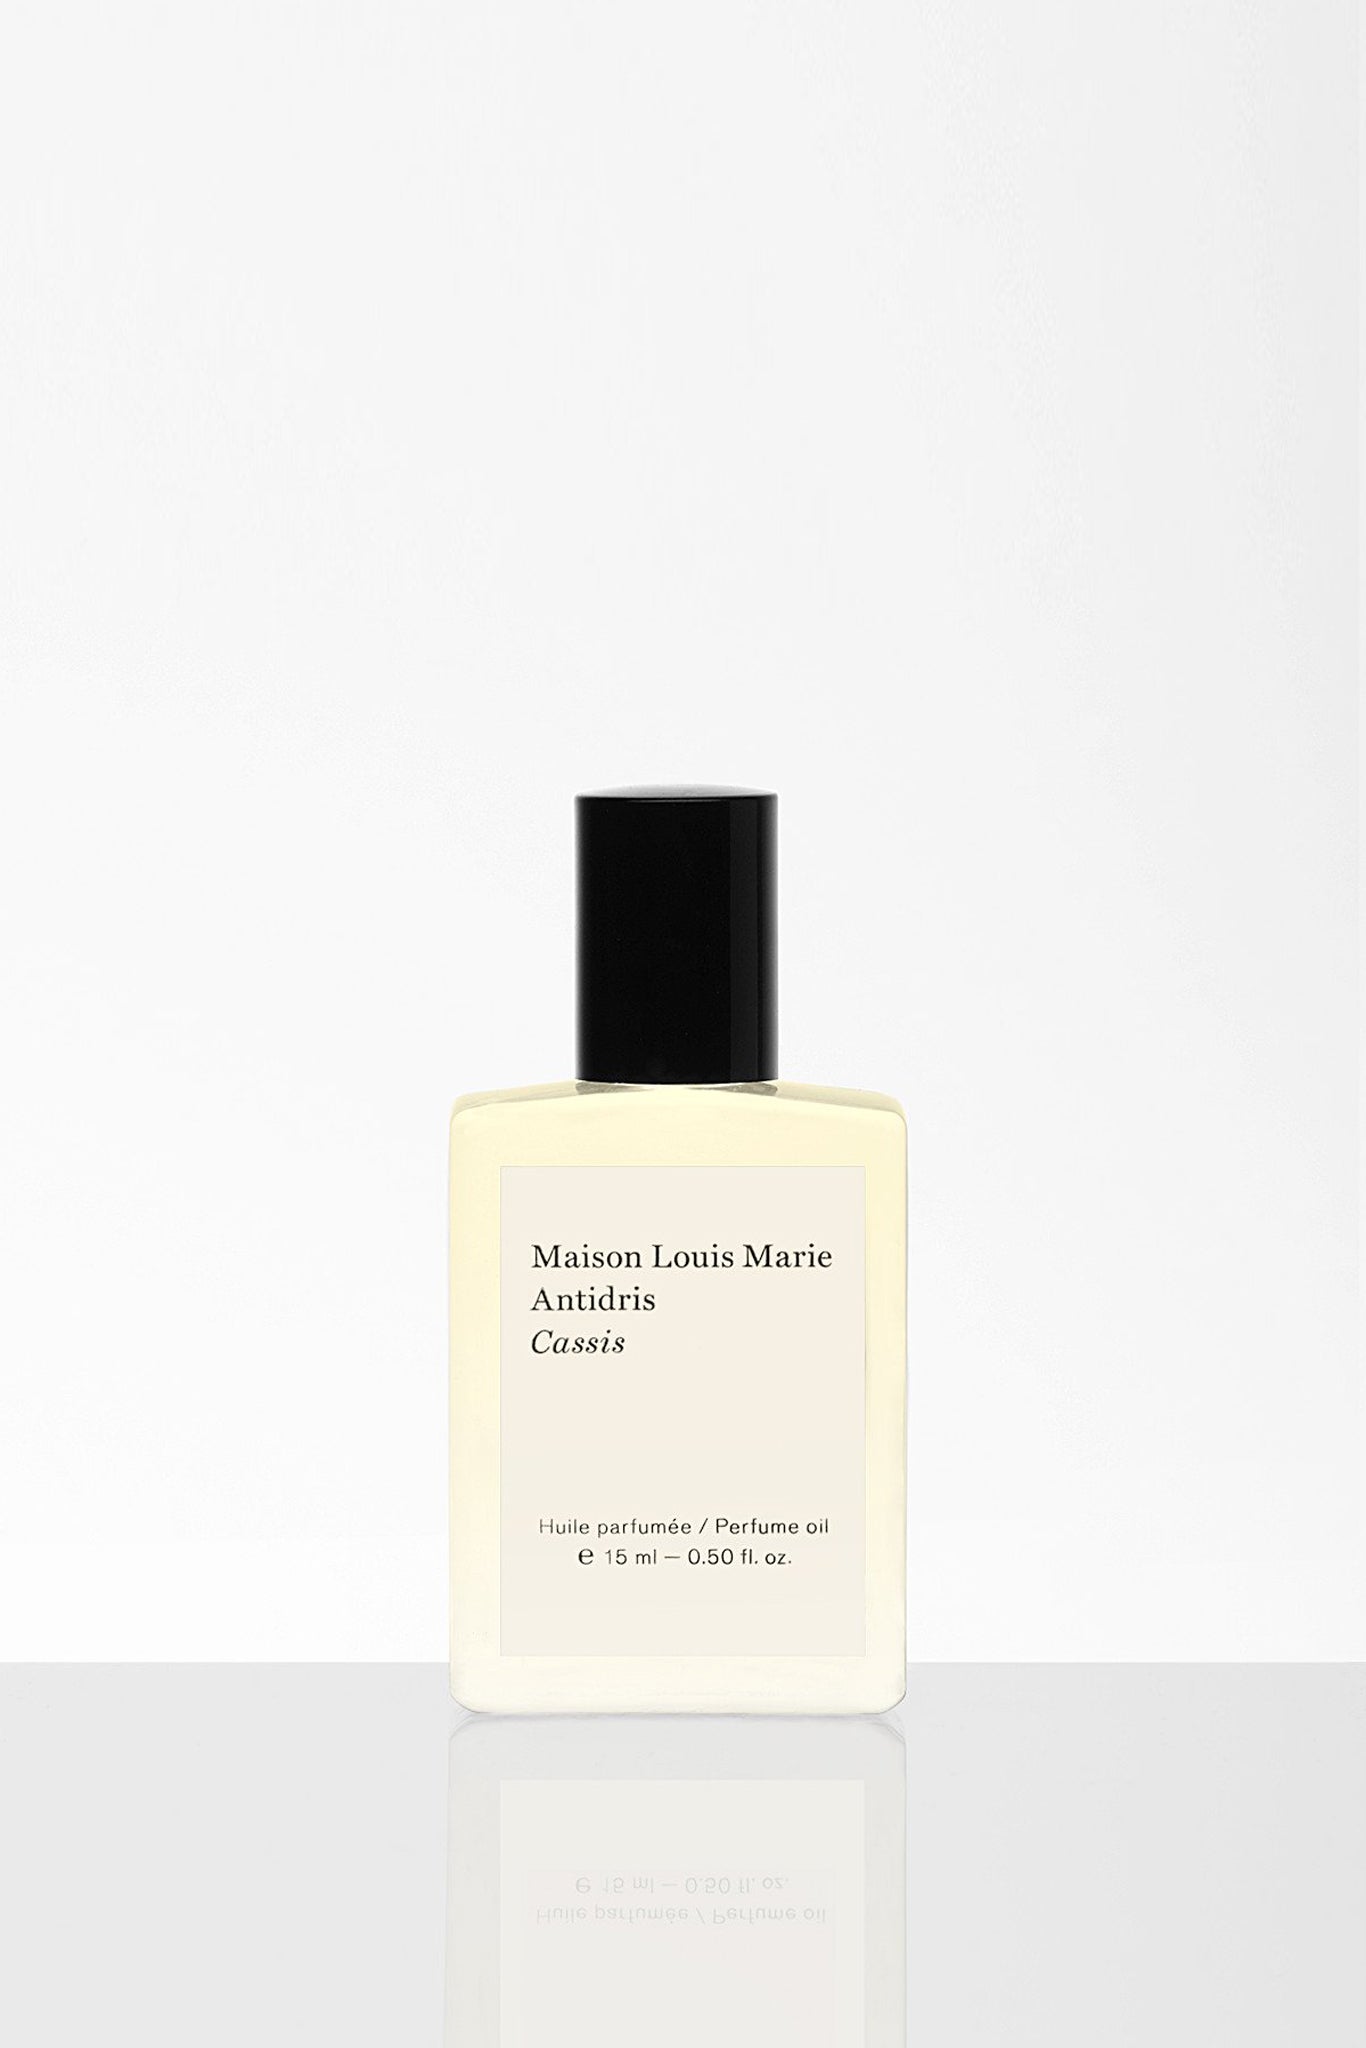 Maison Louis Marie - Perfume & Fragrance